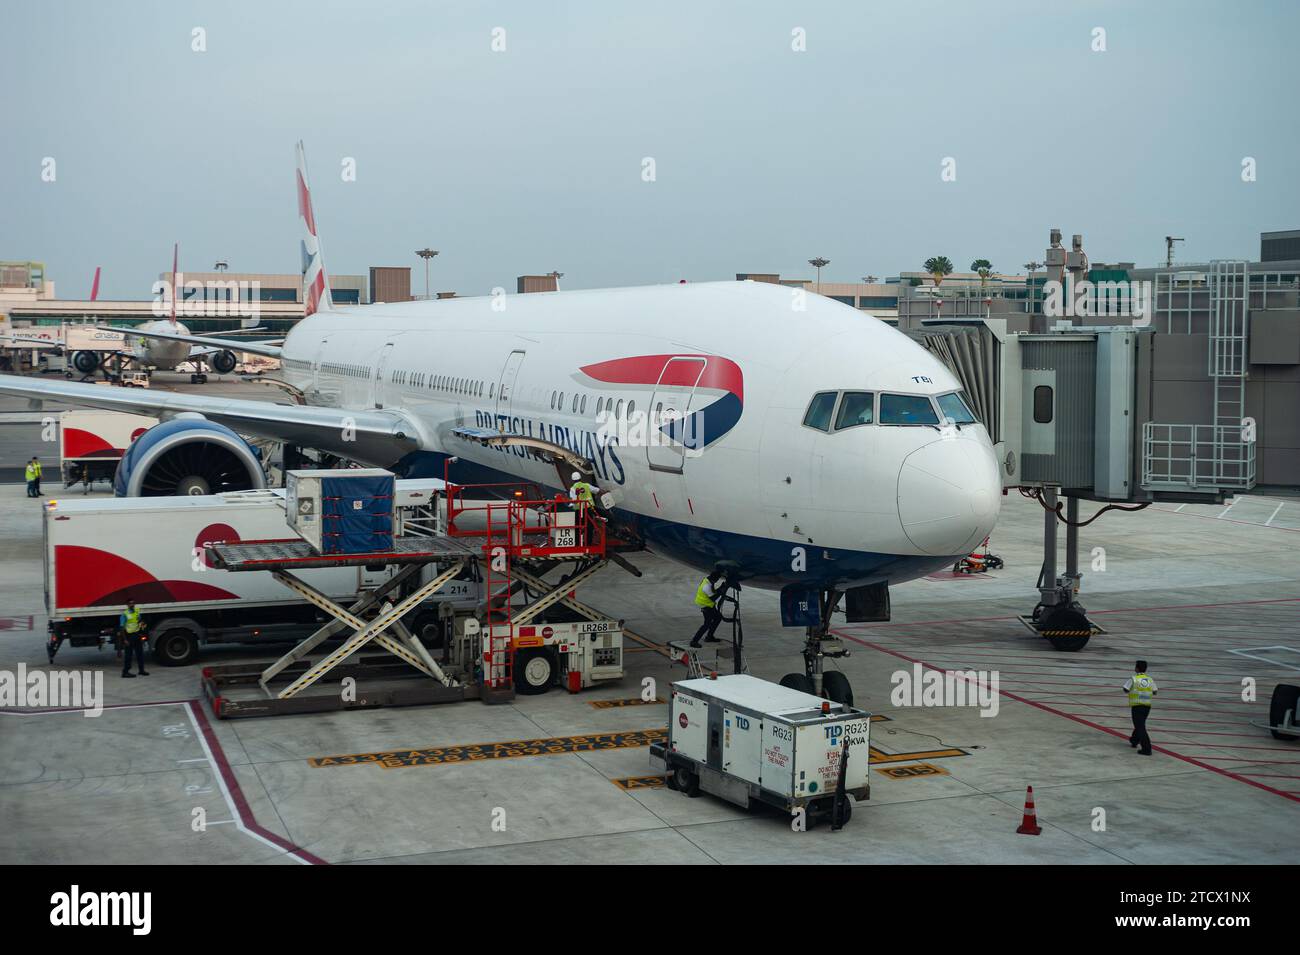 14.09.2018, Singapore, Republic of Singapore, Asia - British Airways Boeing 777-300 ER passenger aircraft is docked at Changi Airport. Stock Photo